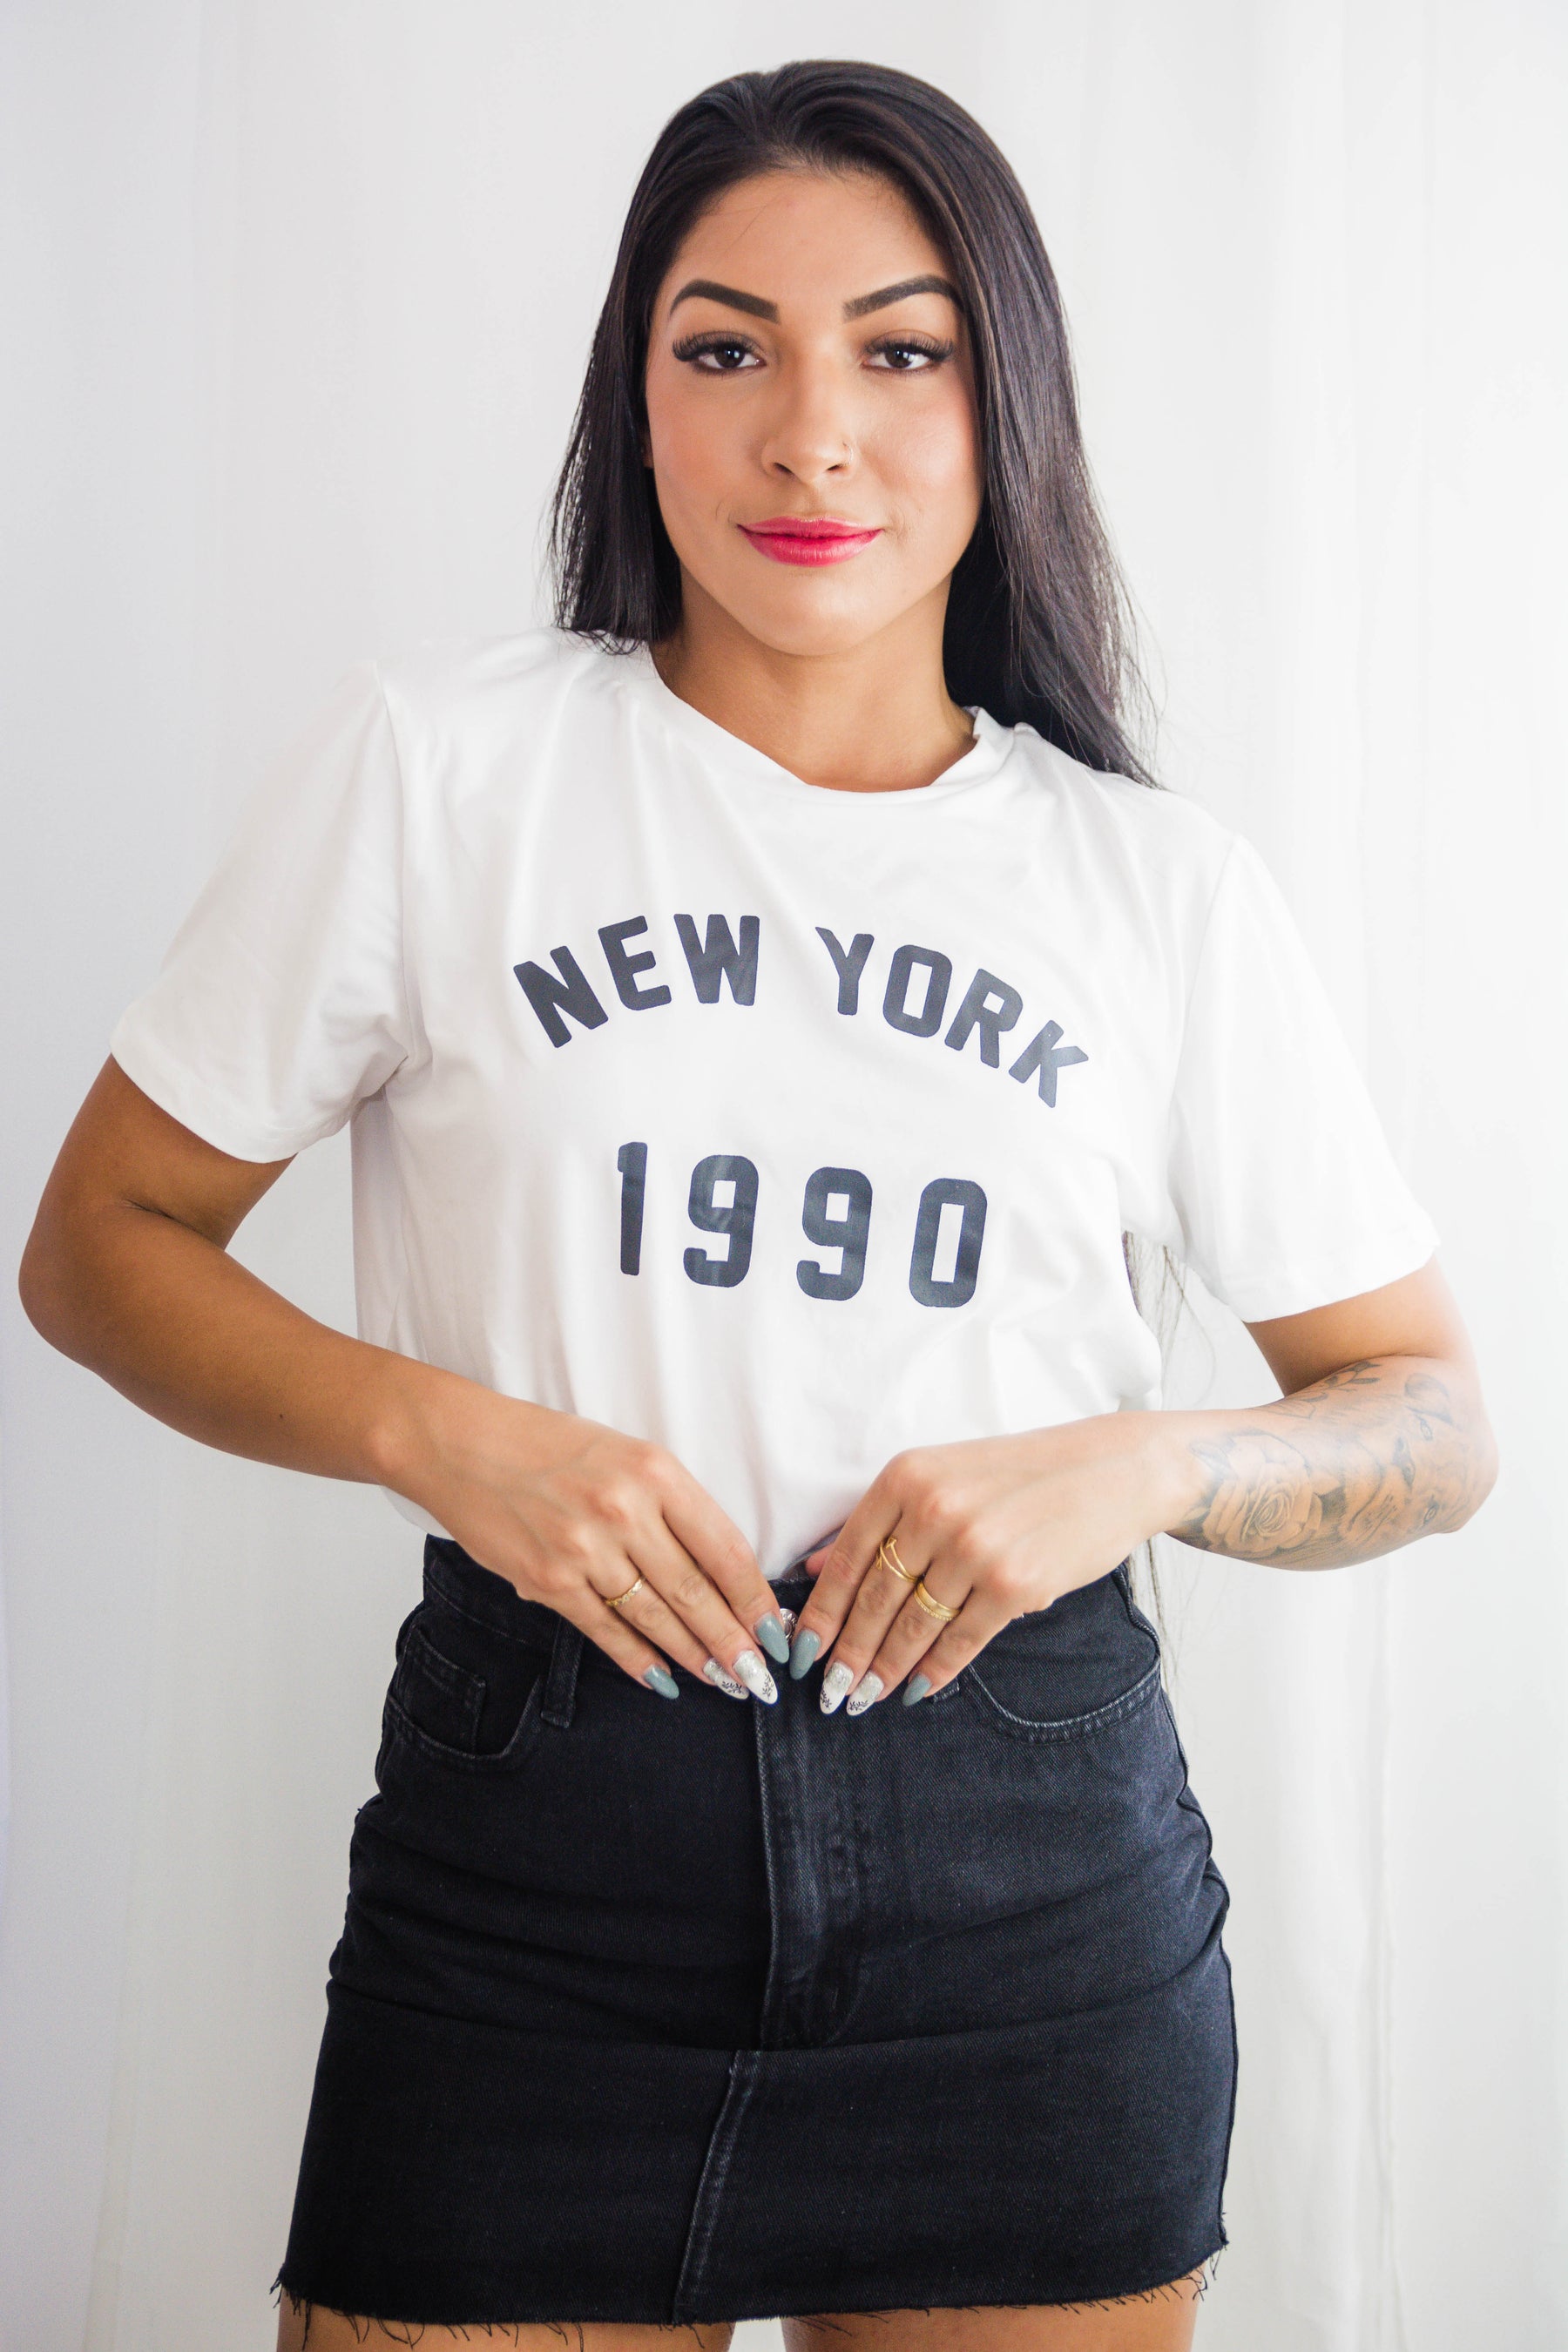 T-shirt New York